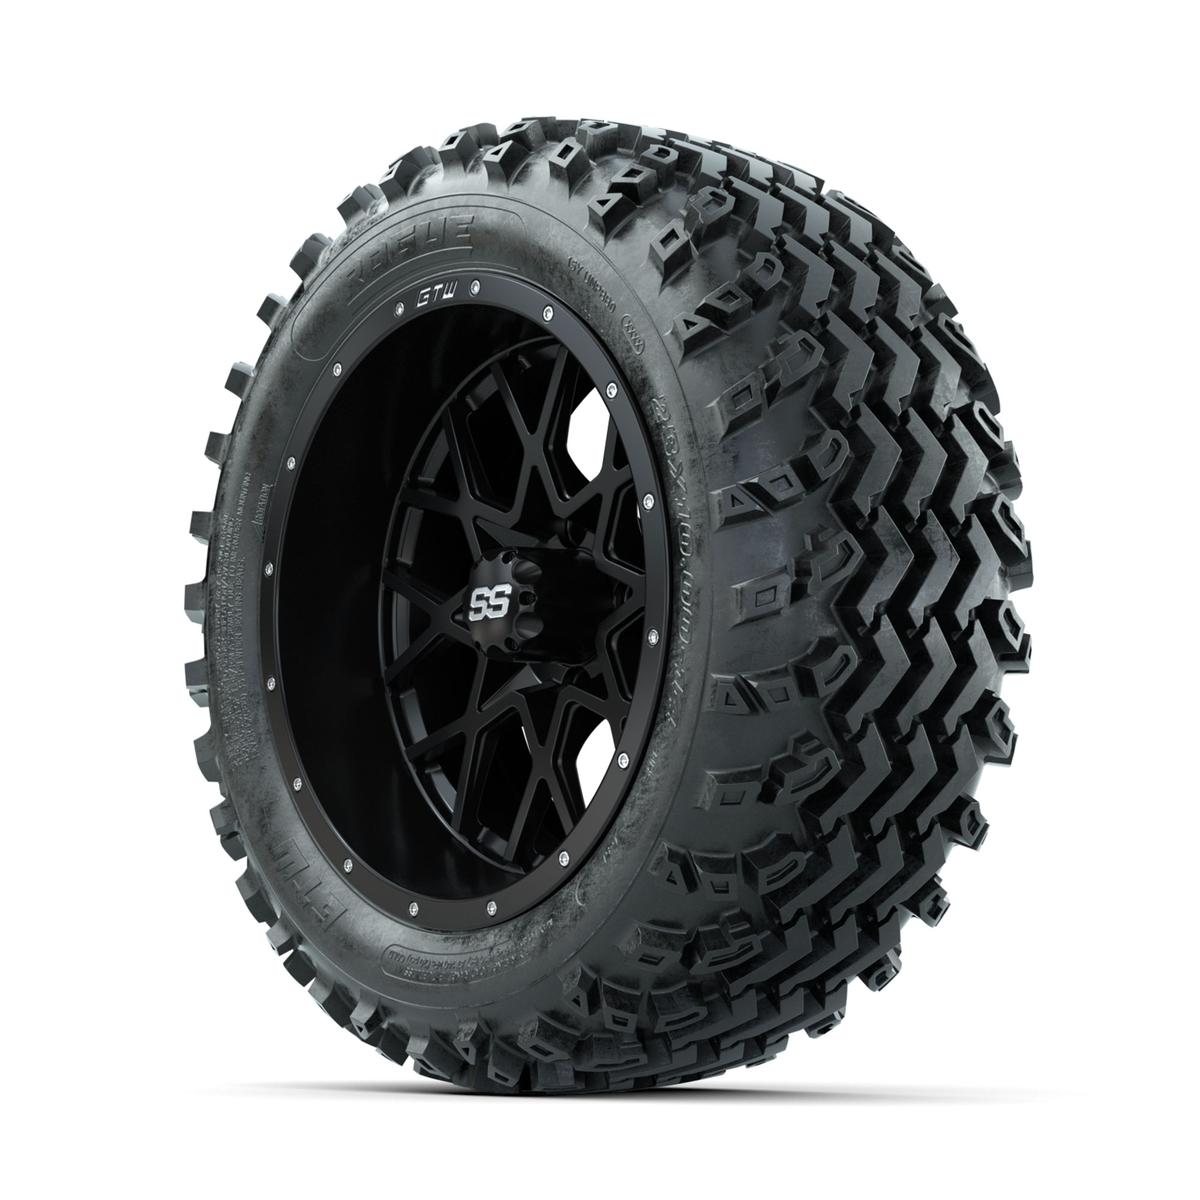 GTW Vortex Matte Black 14 in Wheels with 23x10.00-14 Rogue All Terrain Tires – Full Set